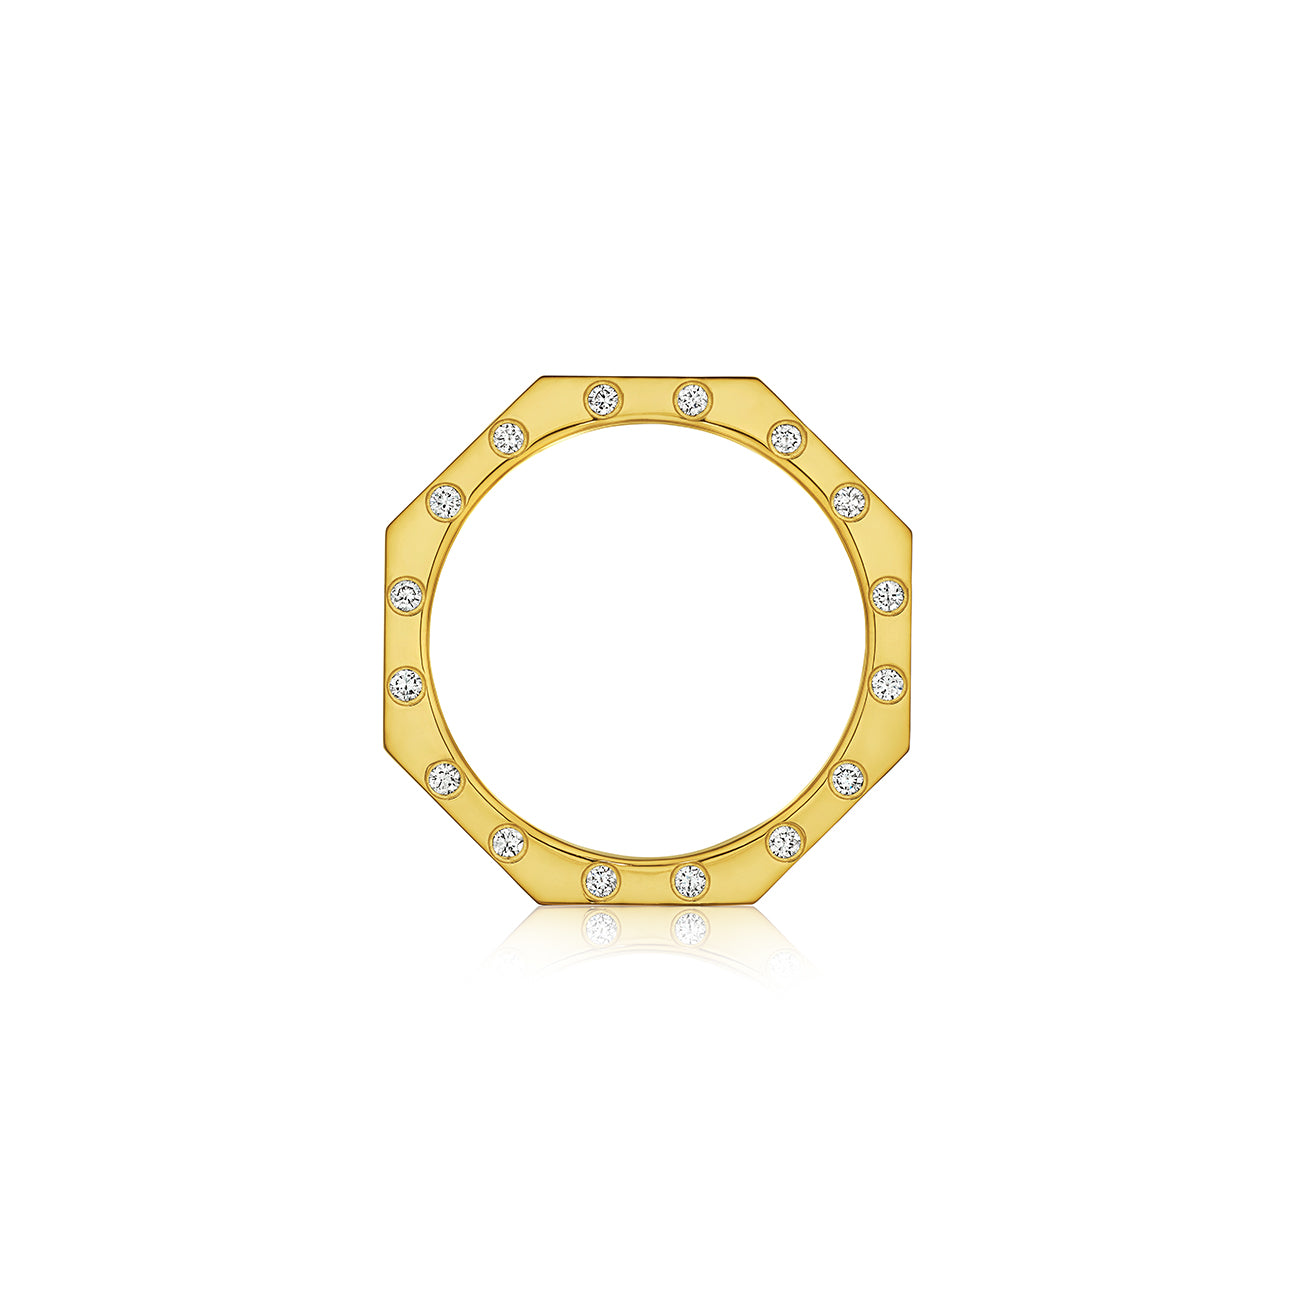 Ti Narrow Ring, 18K Yellow Gold and Diamonds